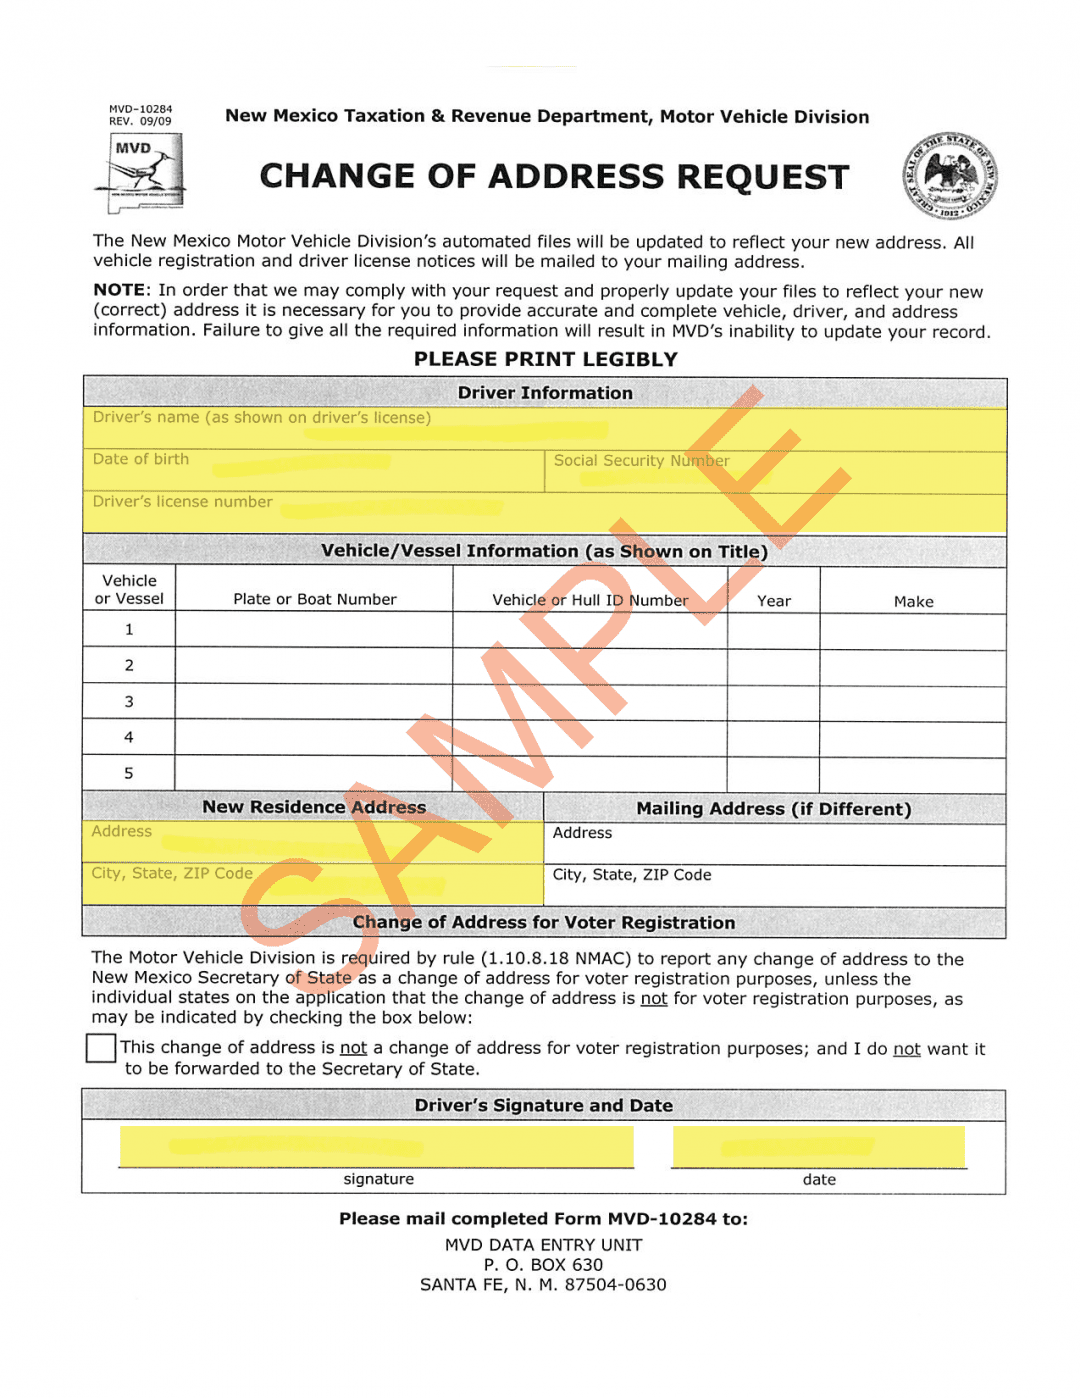 change-of-address-request-mvd-now-dmv-department-of-motor-vehicles